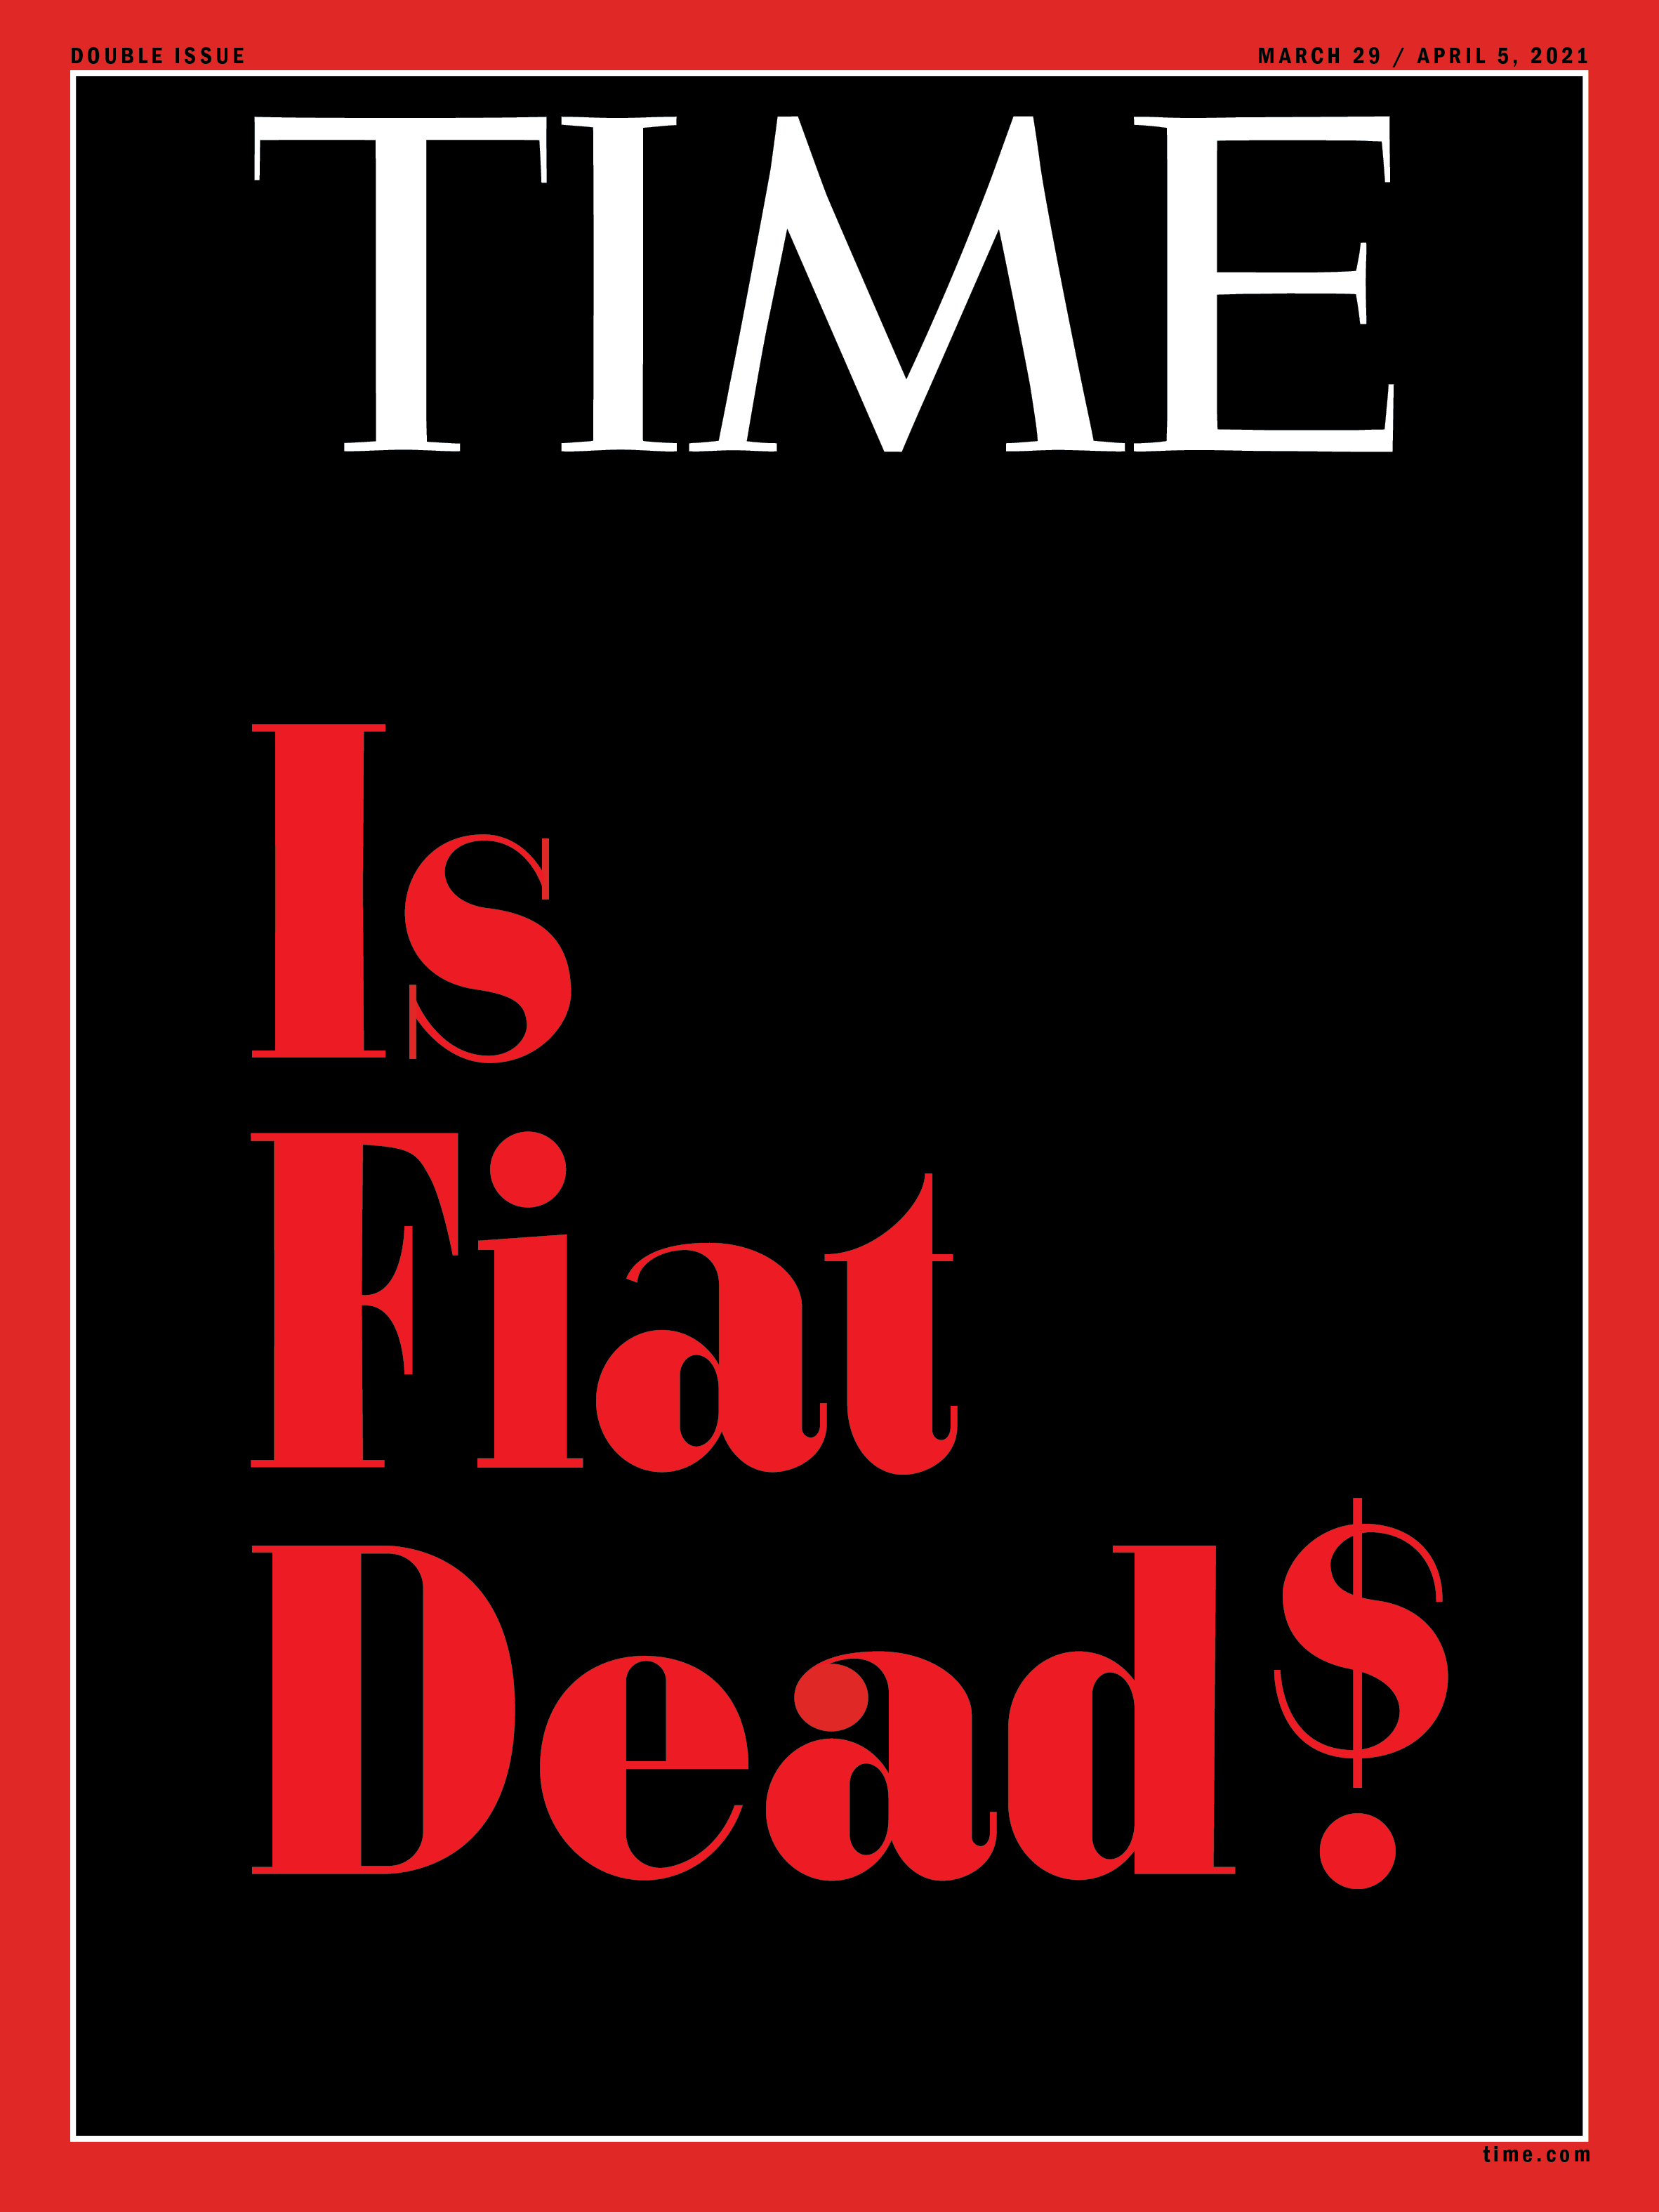 TIME Is Fiat Dead?